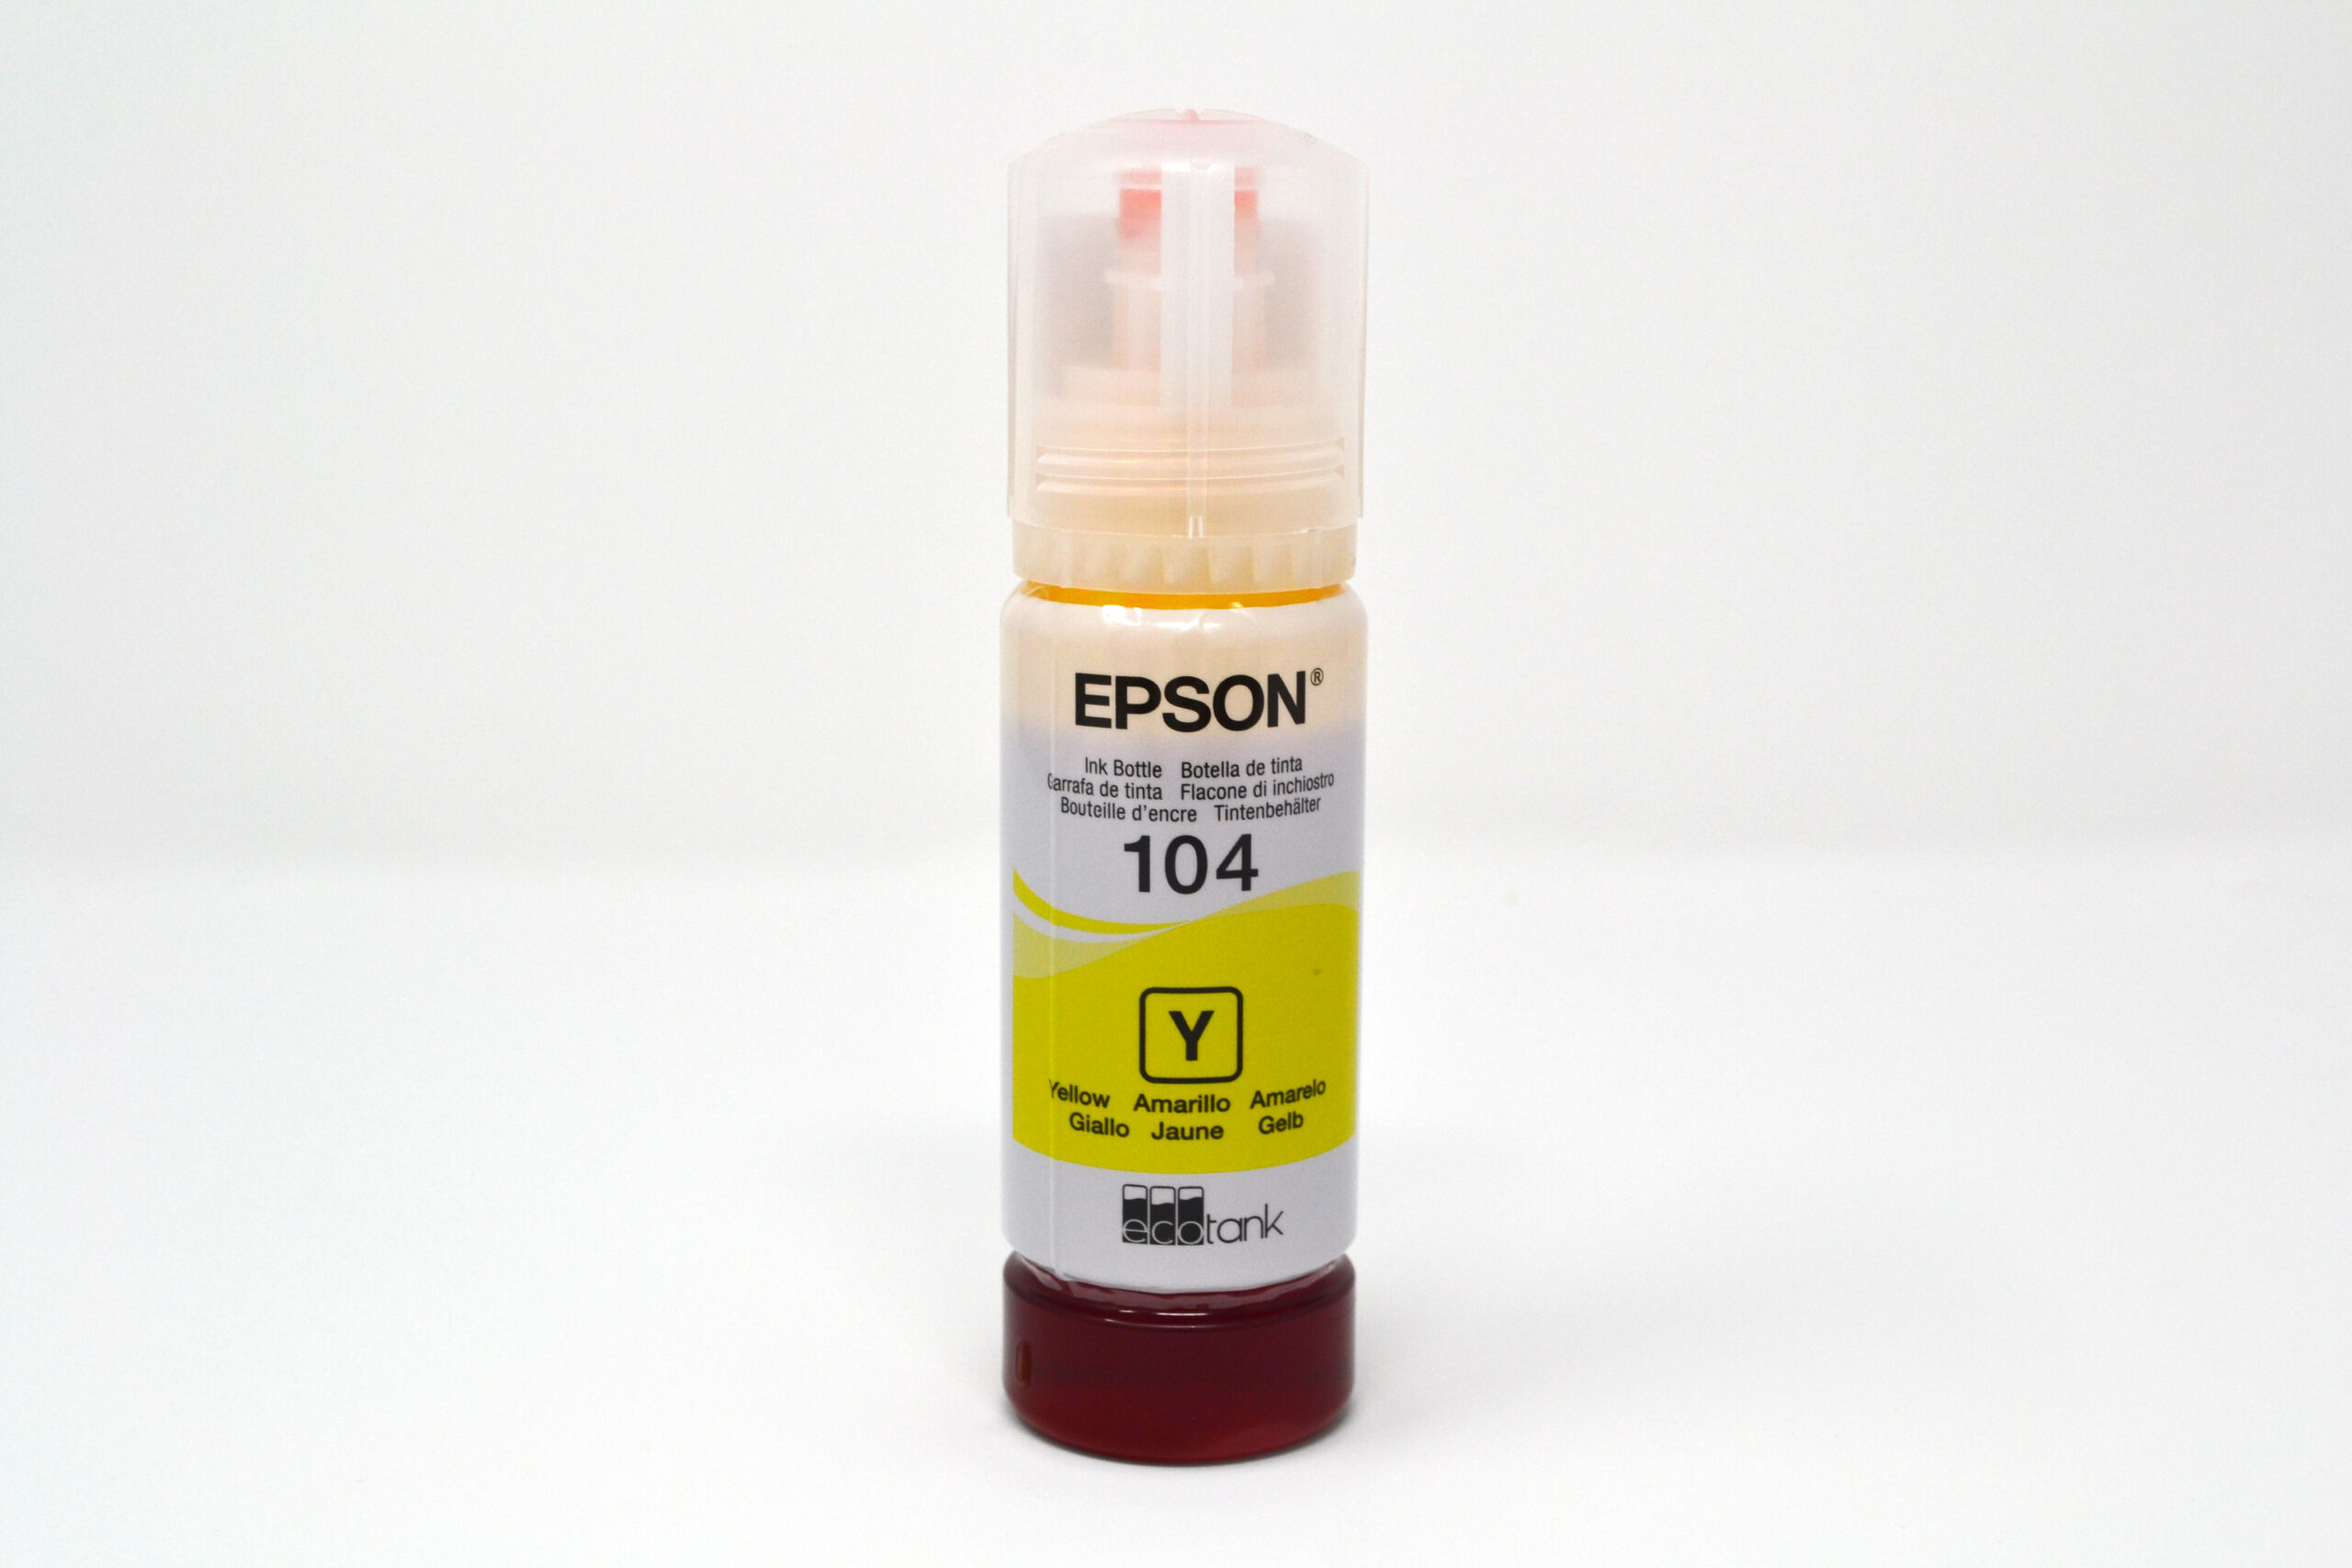 Epson 104 Ink Bottle Set for Ecotank Printers - Genuine Epson Original Ink